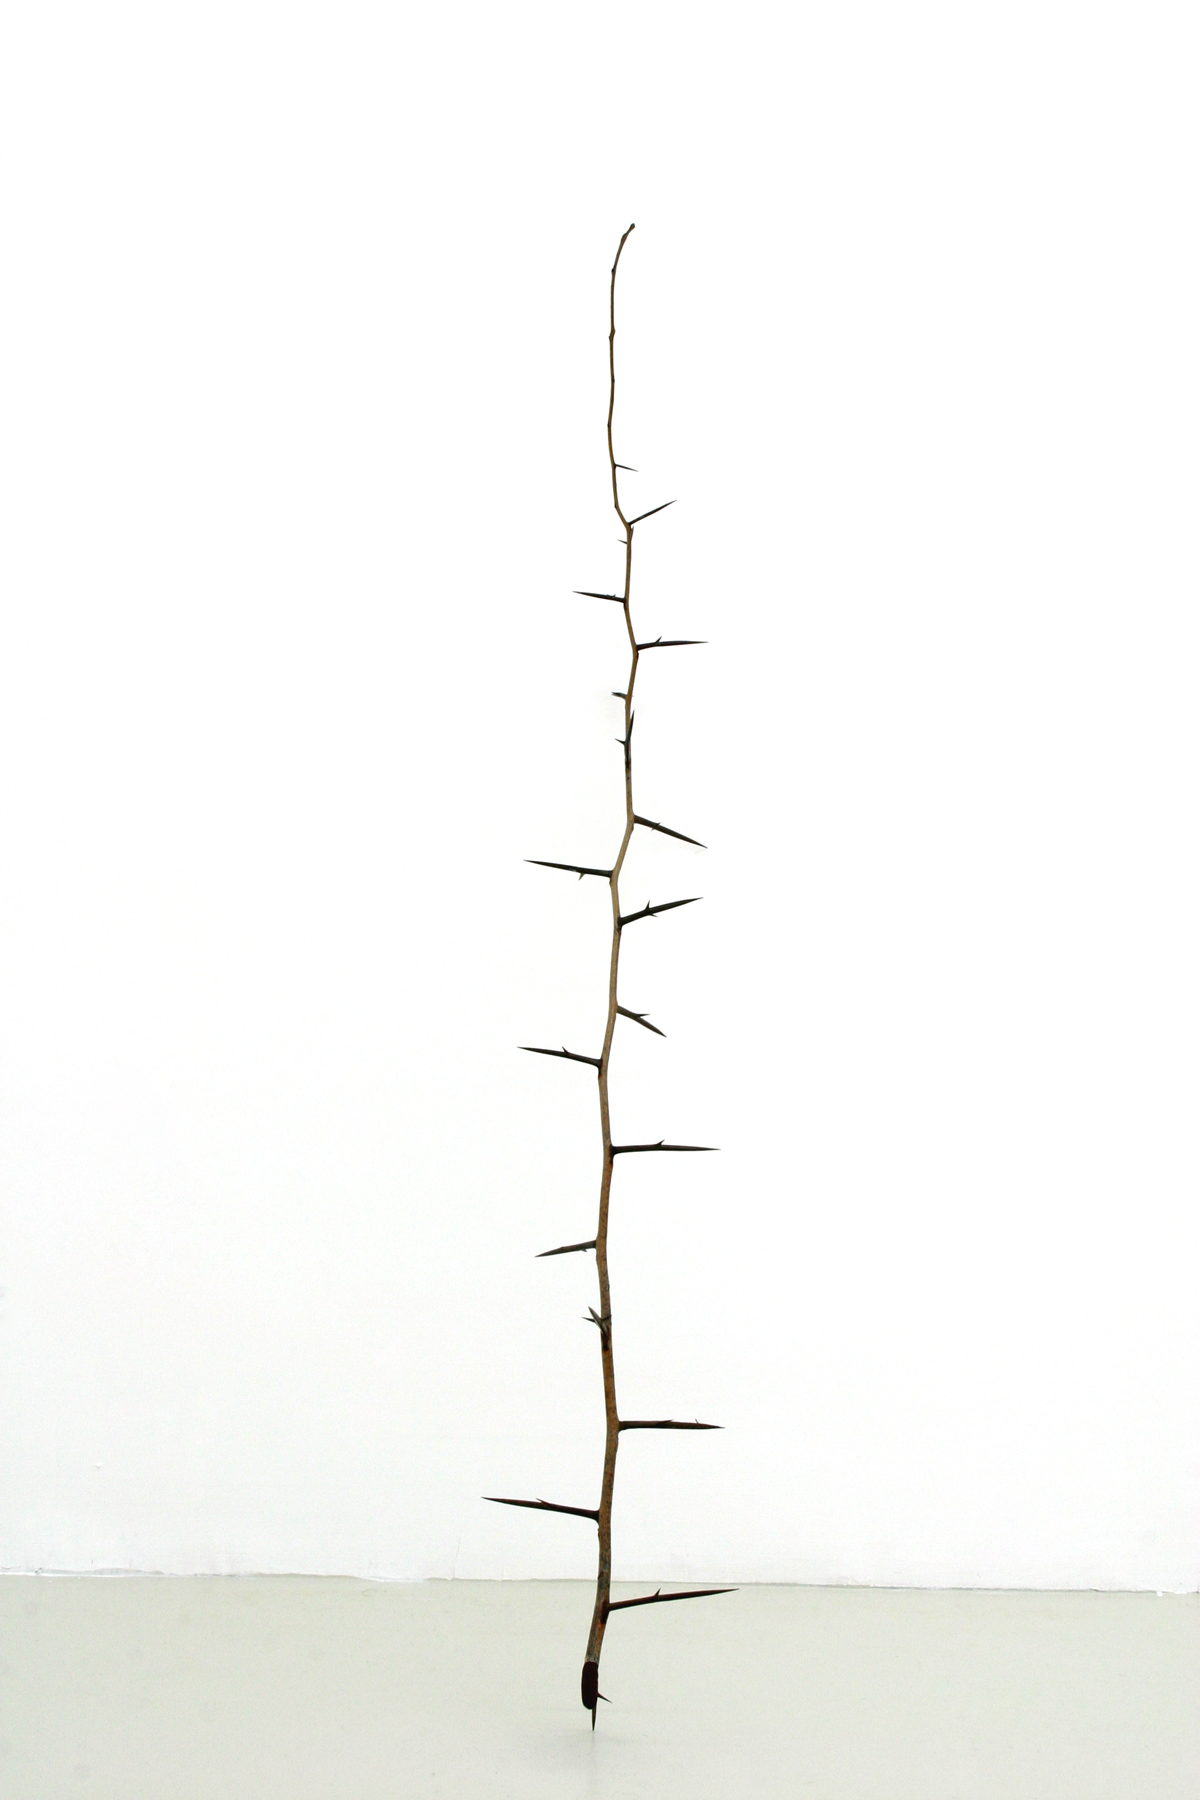 Untitled, 2006, carrob branch, cm 123 x 5